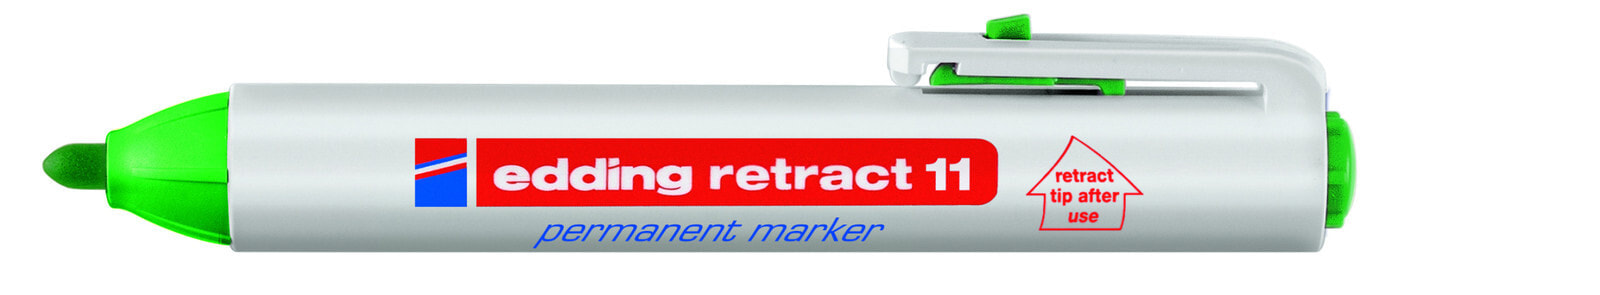 Edding Retract 11 Permanent Marker Green (10) перманентная маркер 4161004